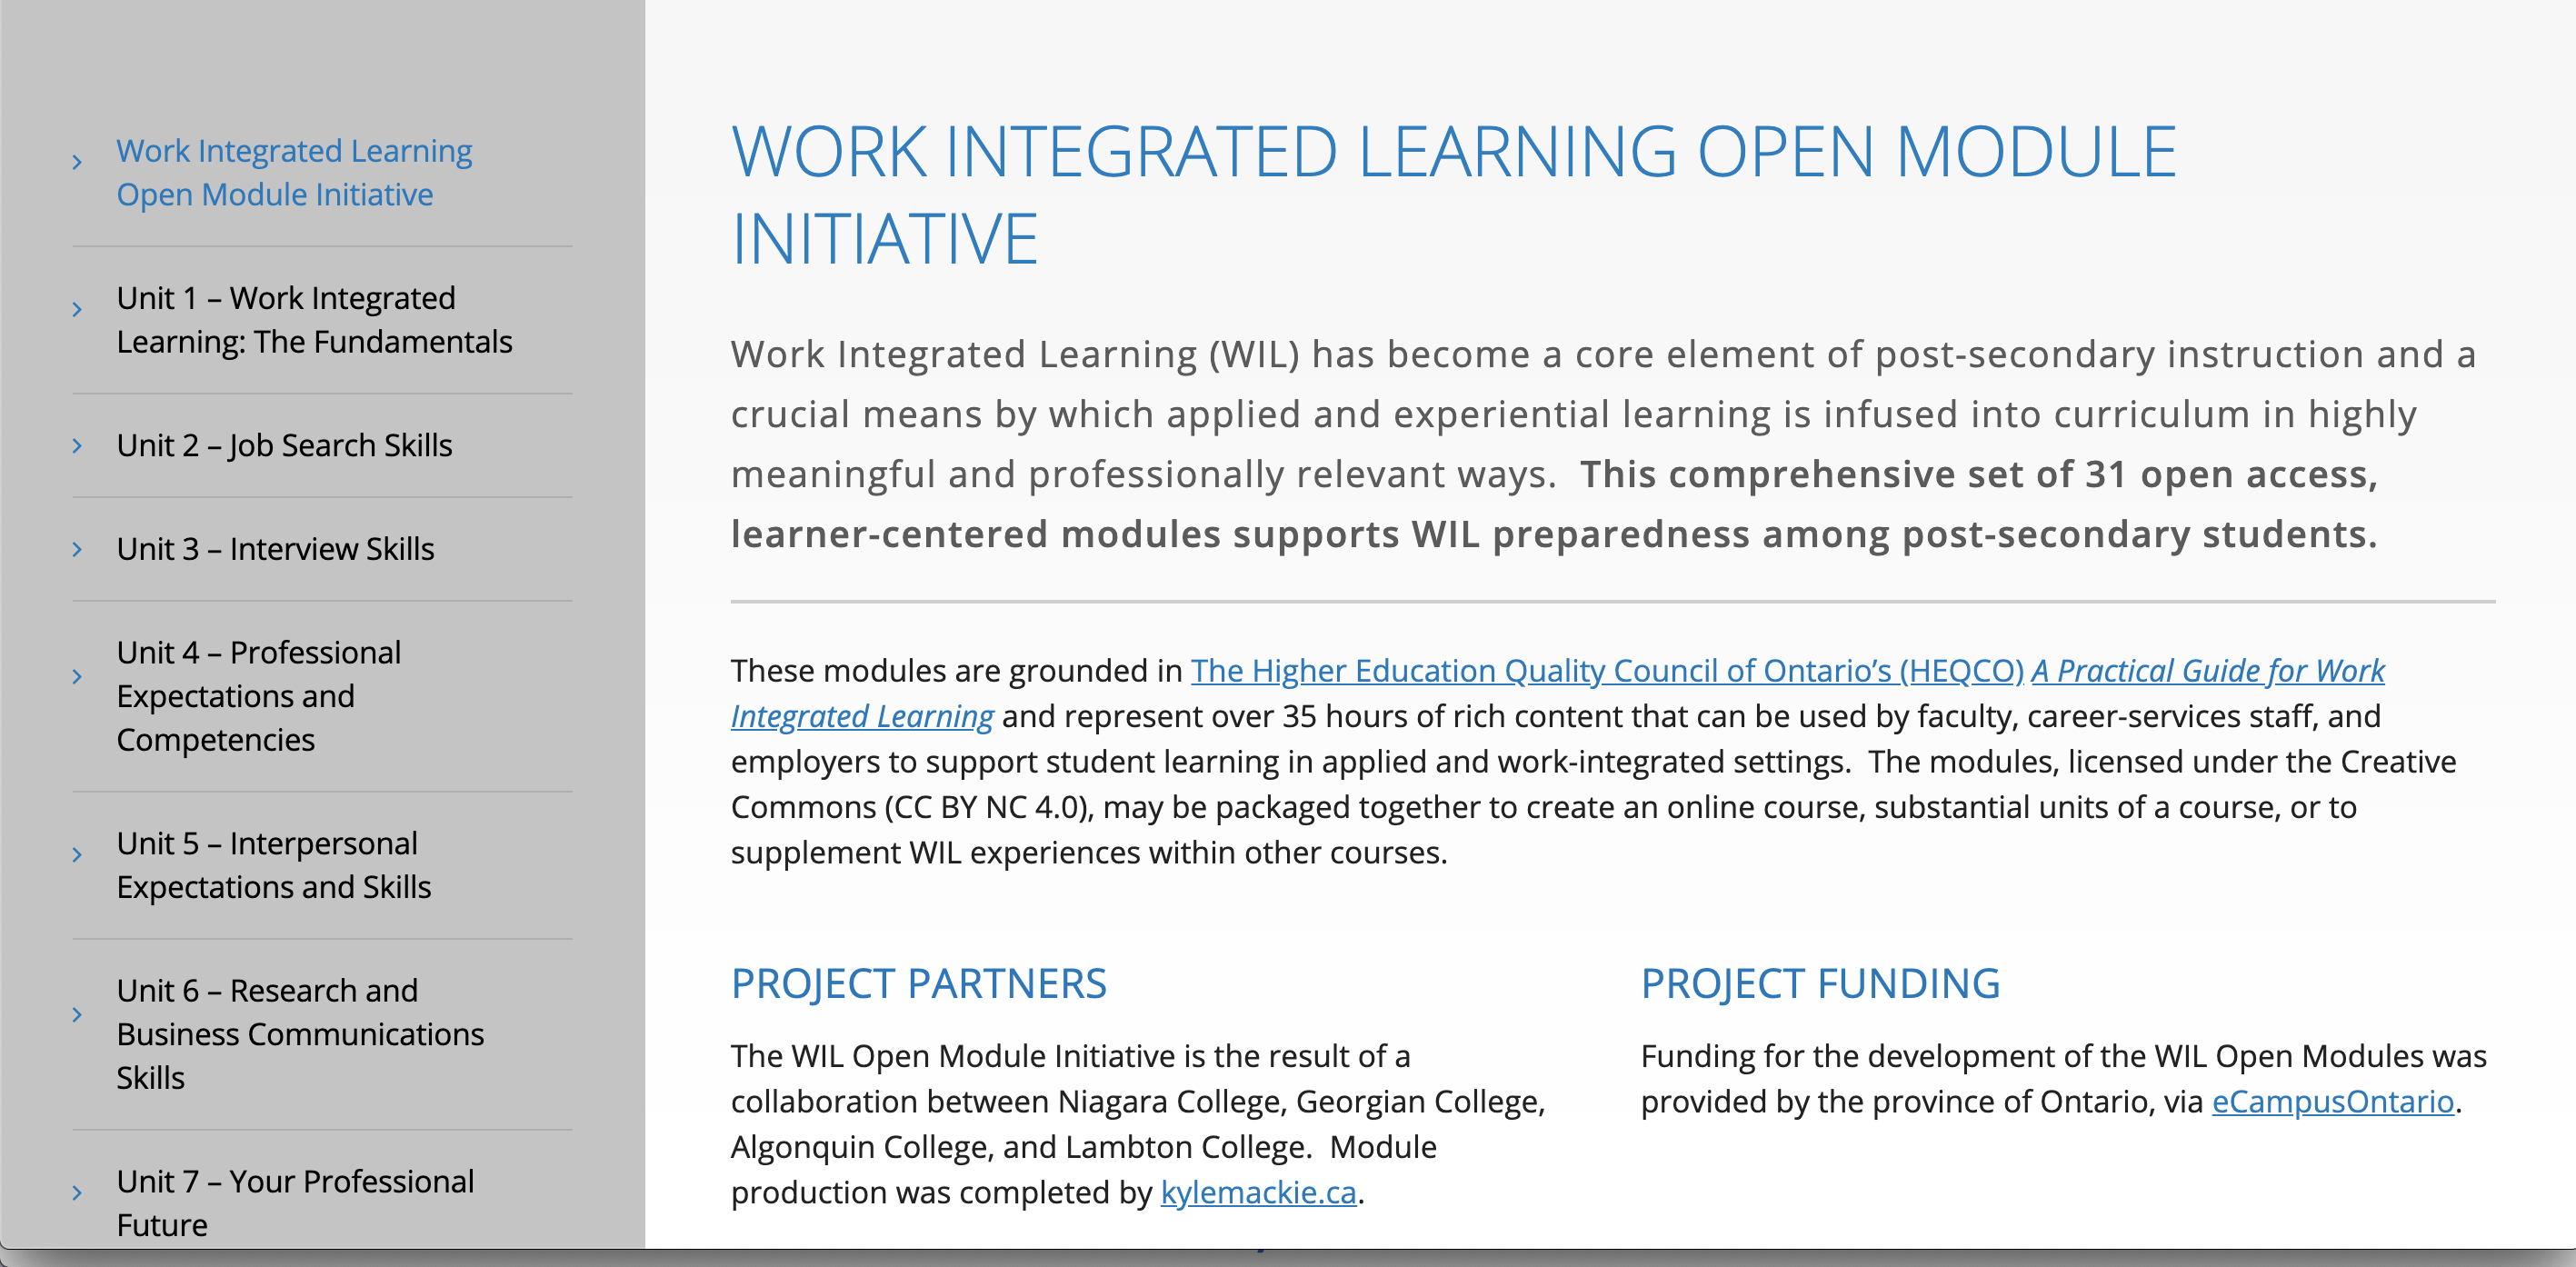 Work Integrated Learning Open Module Initiative